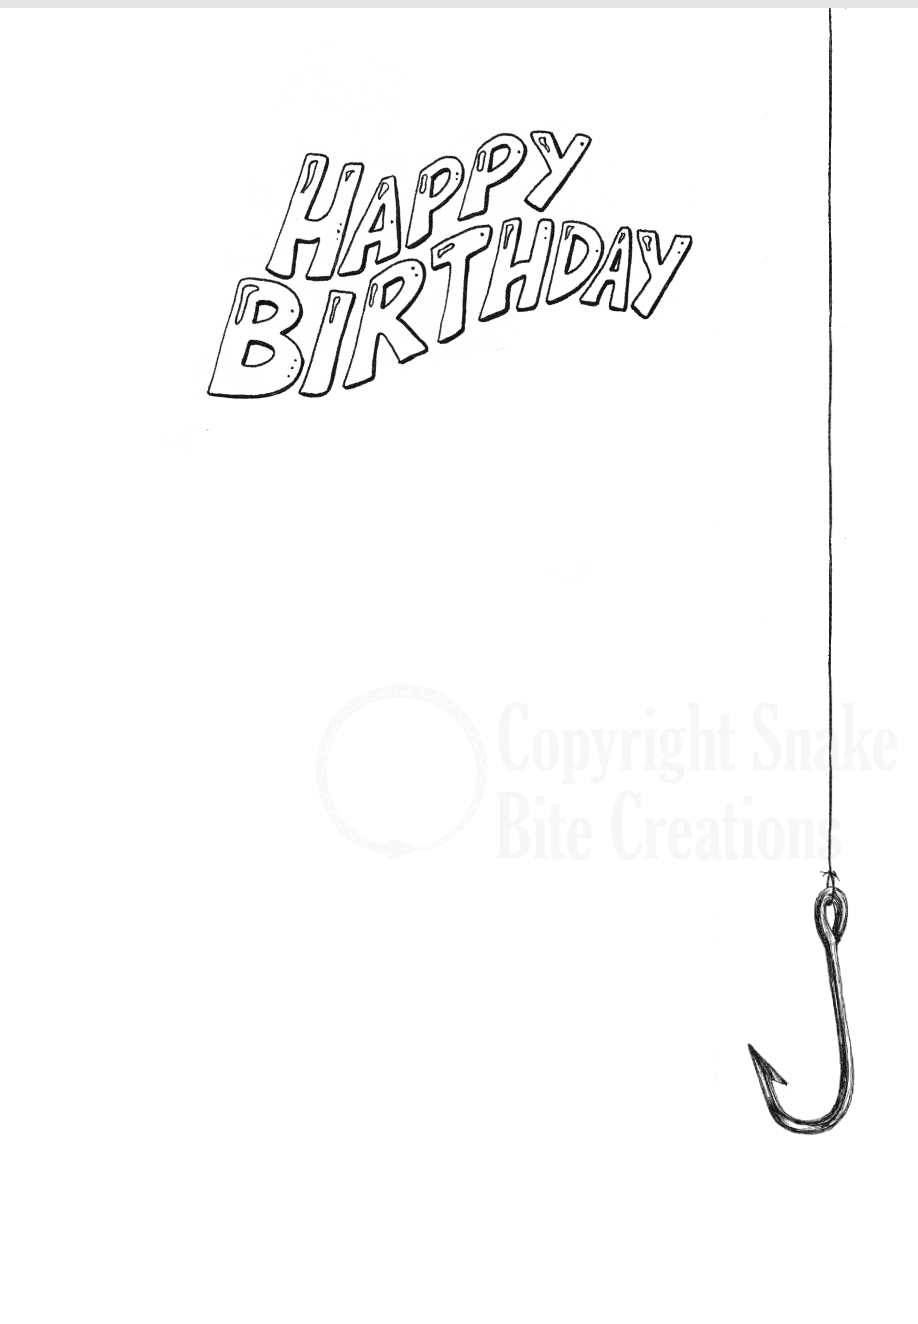 'Happy Birthday' Bass Fish Card